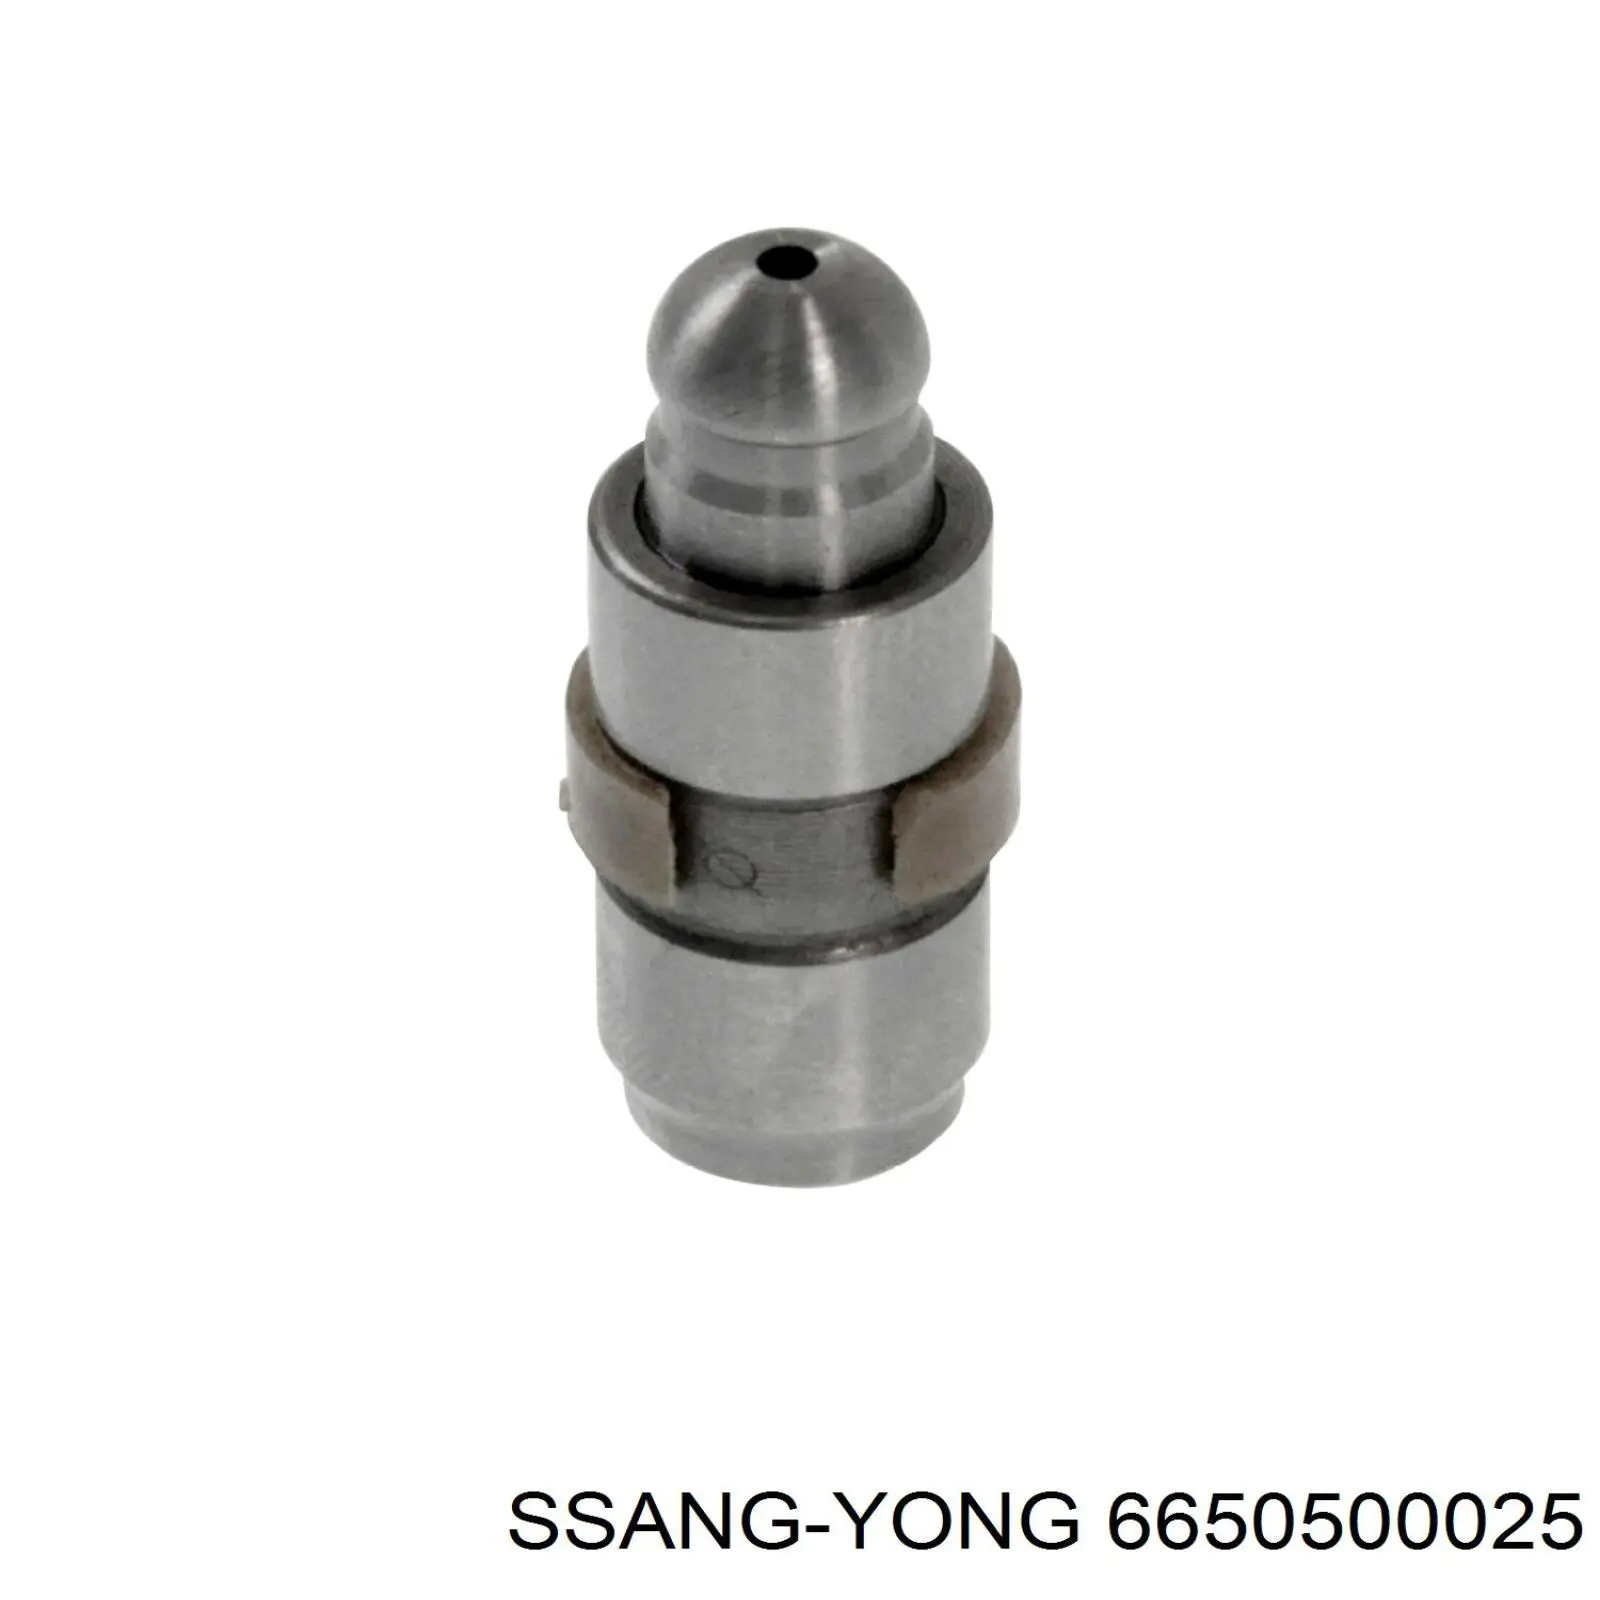 6650500025 Ssang Yong compensador hidrâulico (empurrador hidrâulico, empurrador de válvulas)